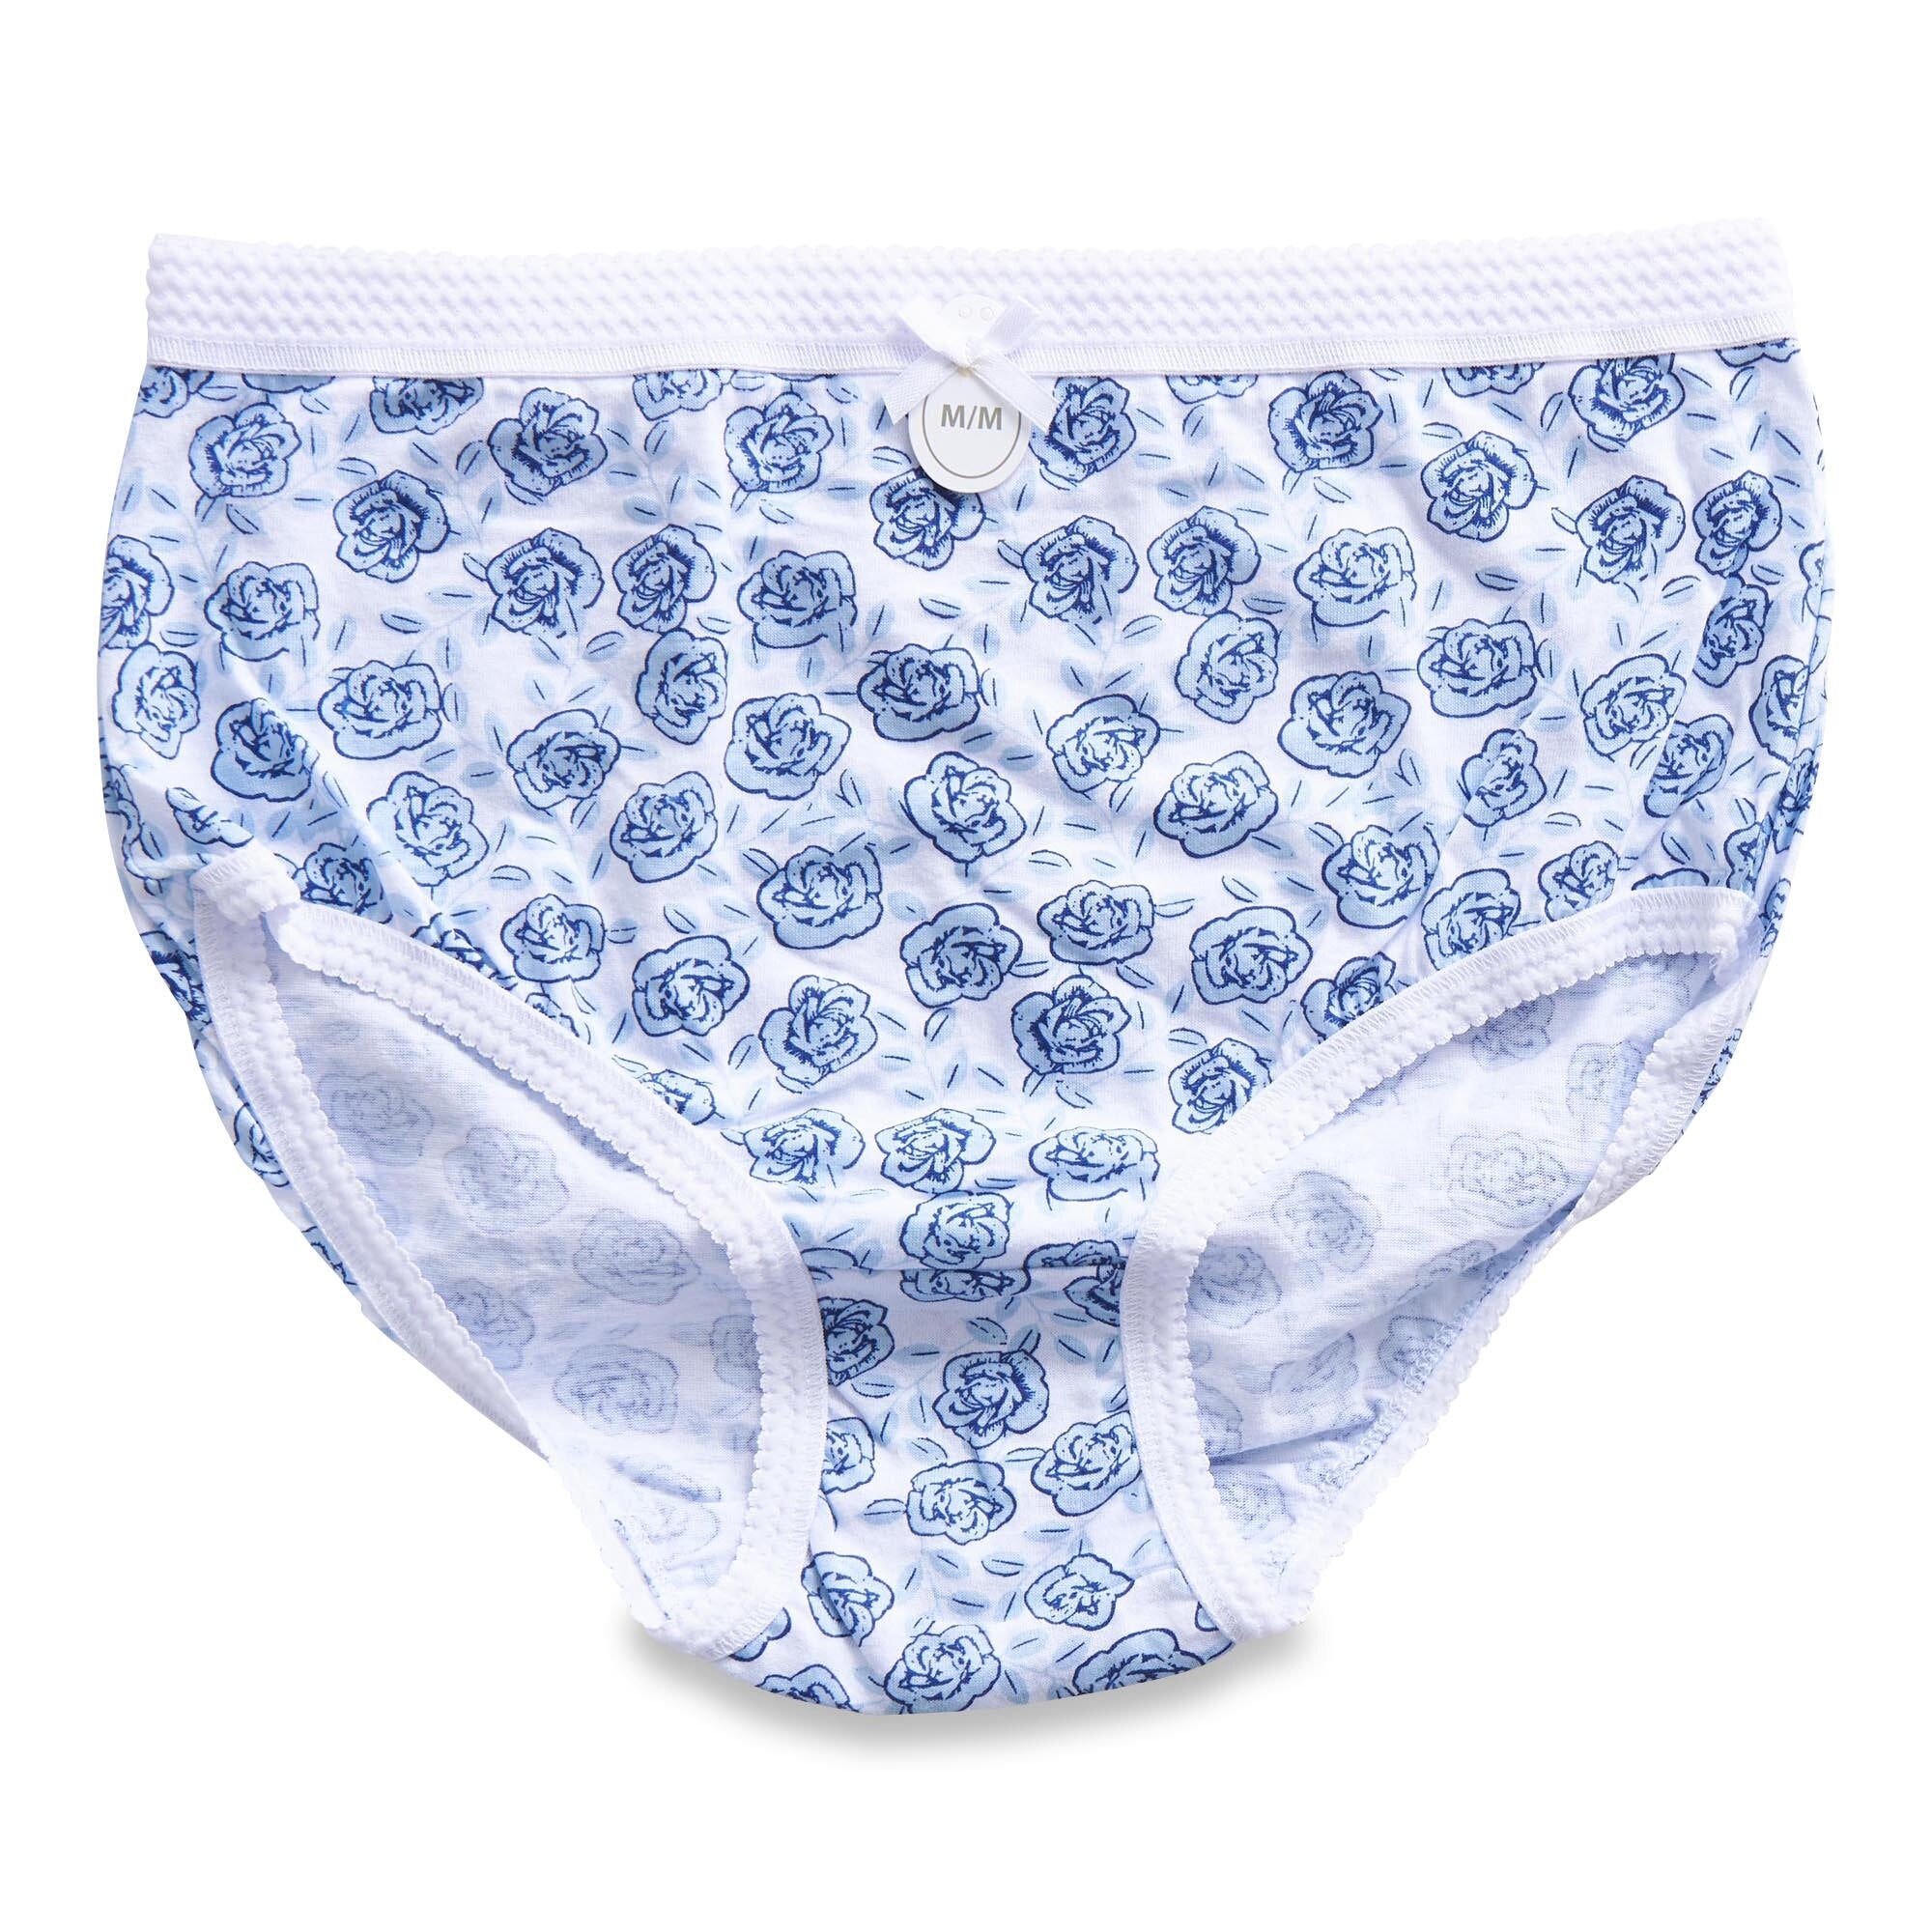  XWSM 4PCS Seniors Ladies Underwear 100% Cotton Briefs